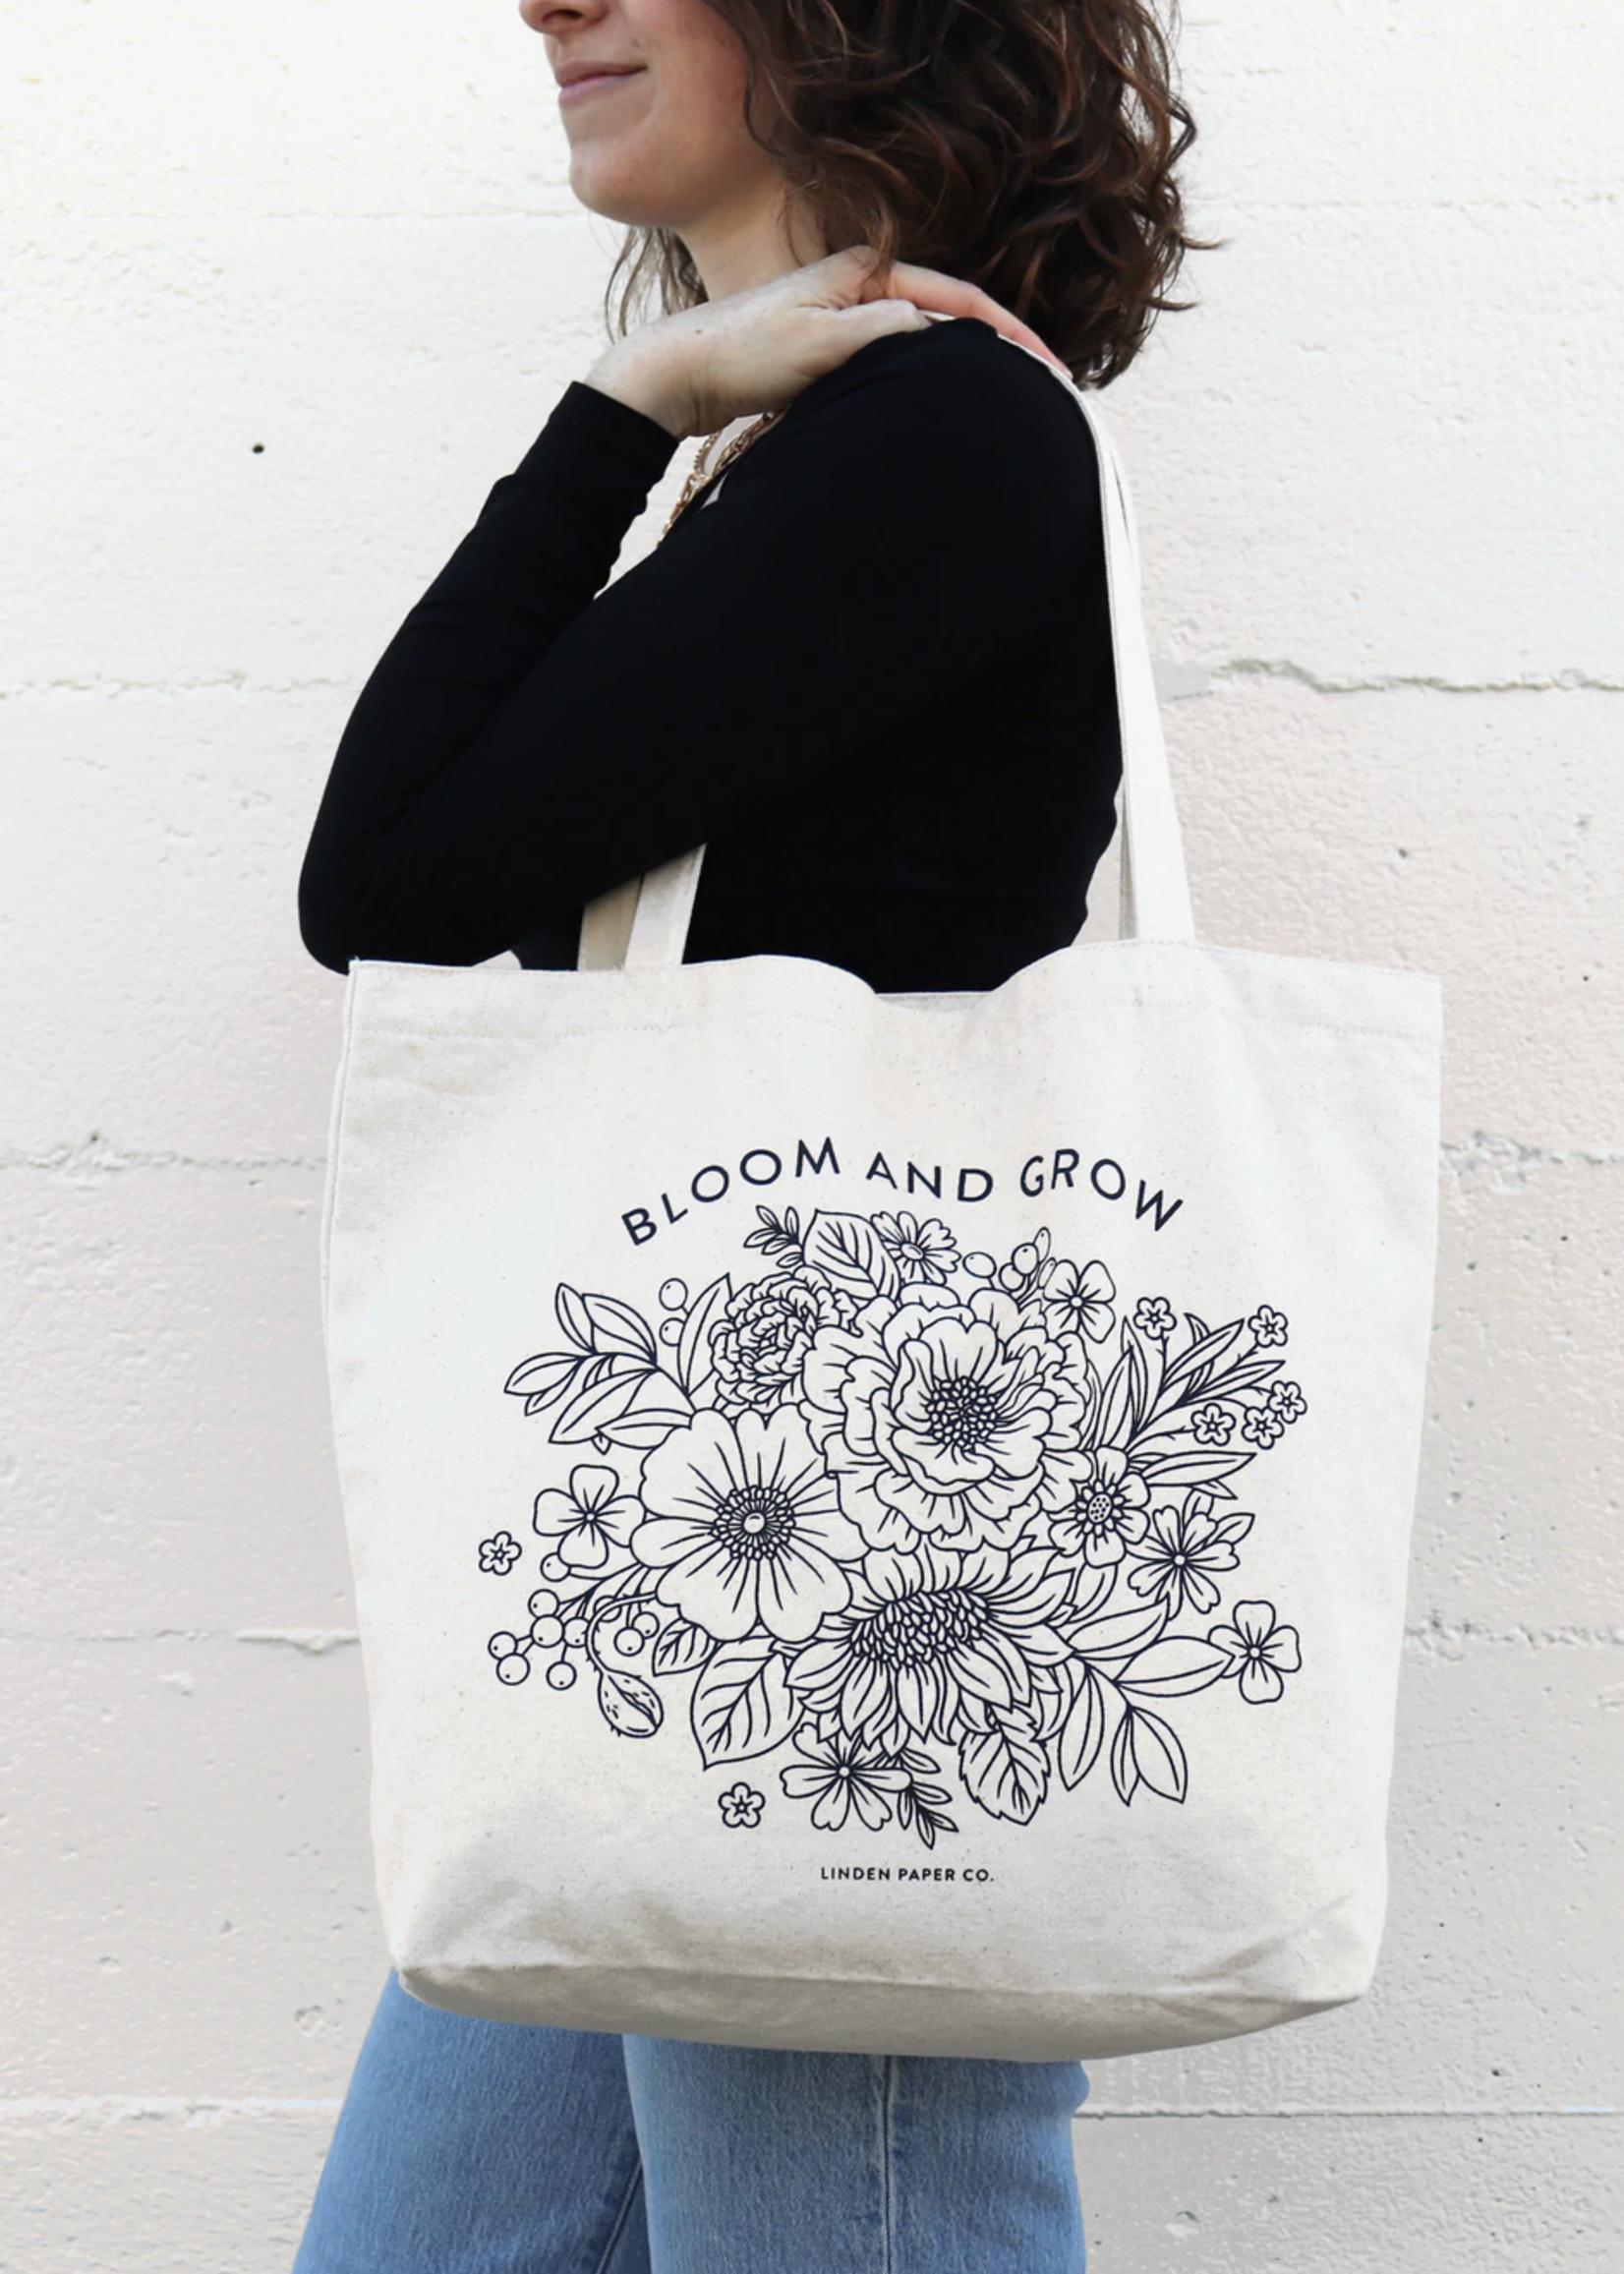 Linden Paper Co Bloom & Grow Tote Bag